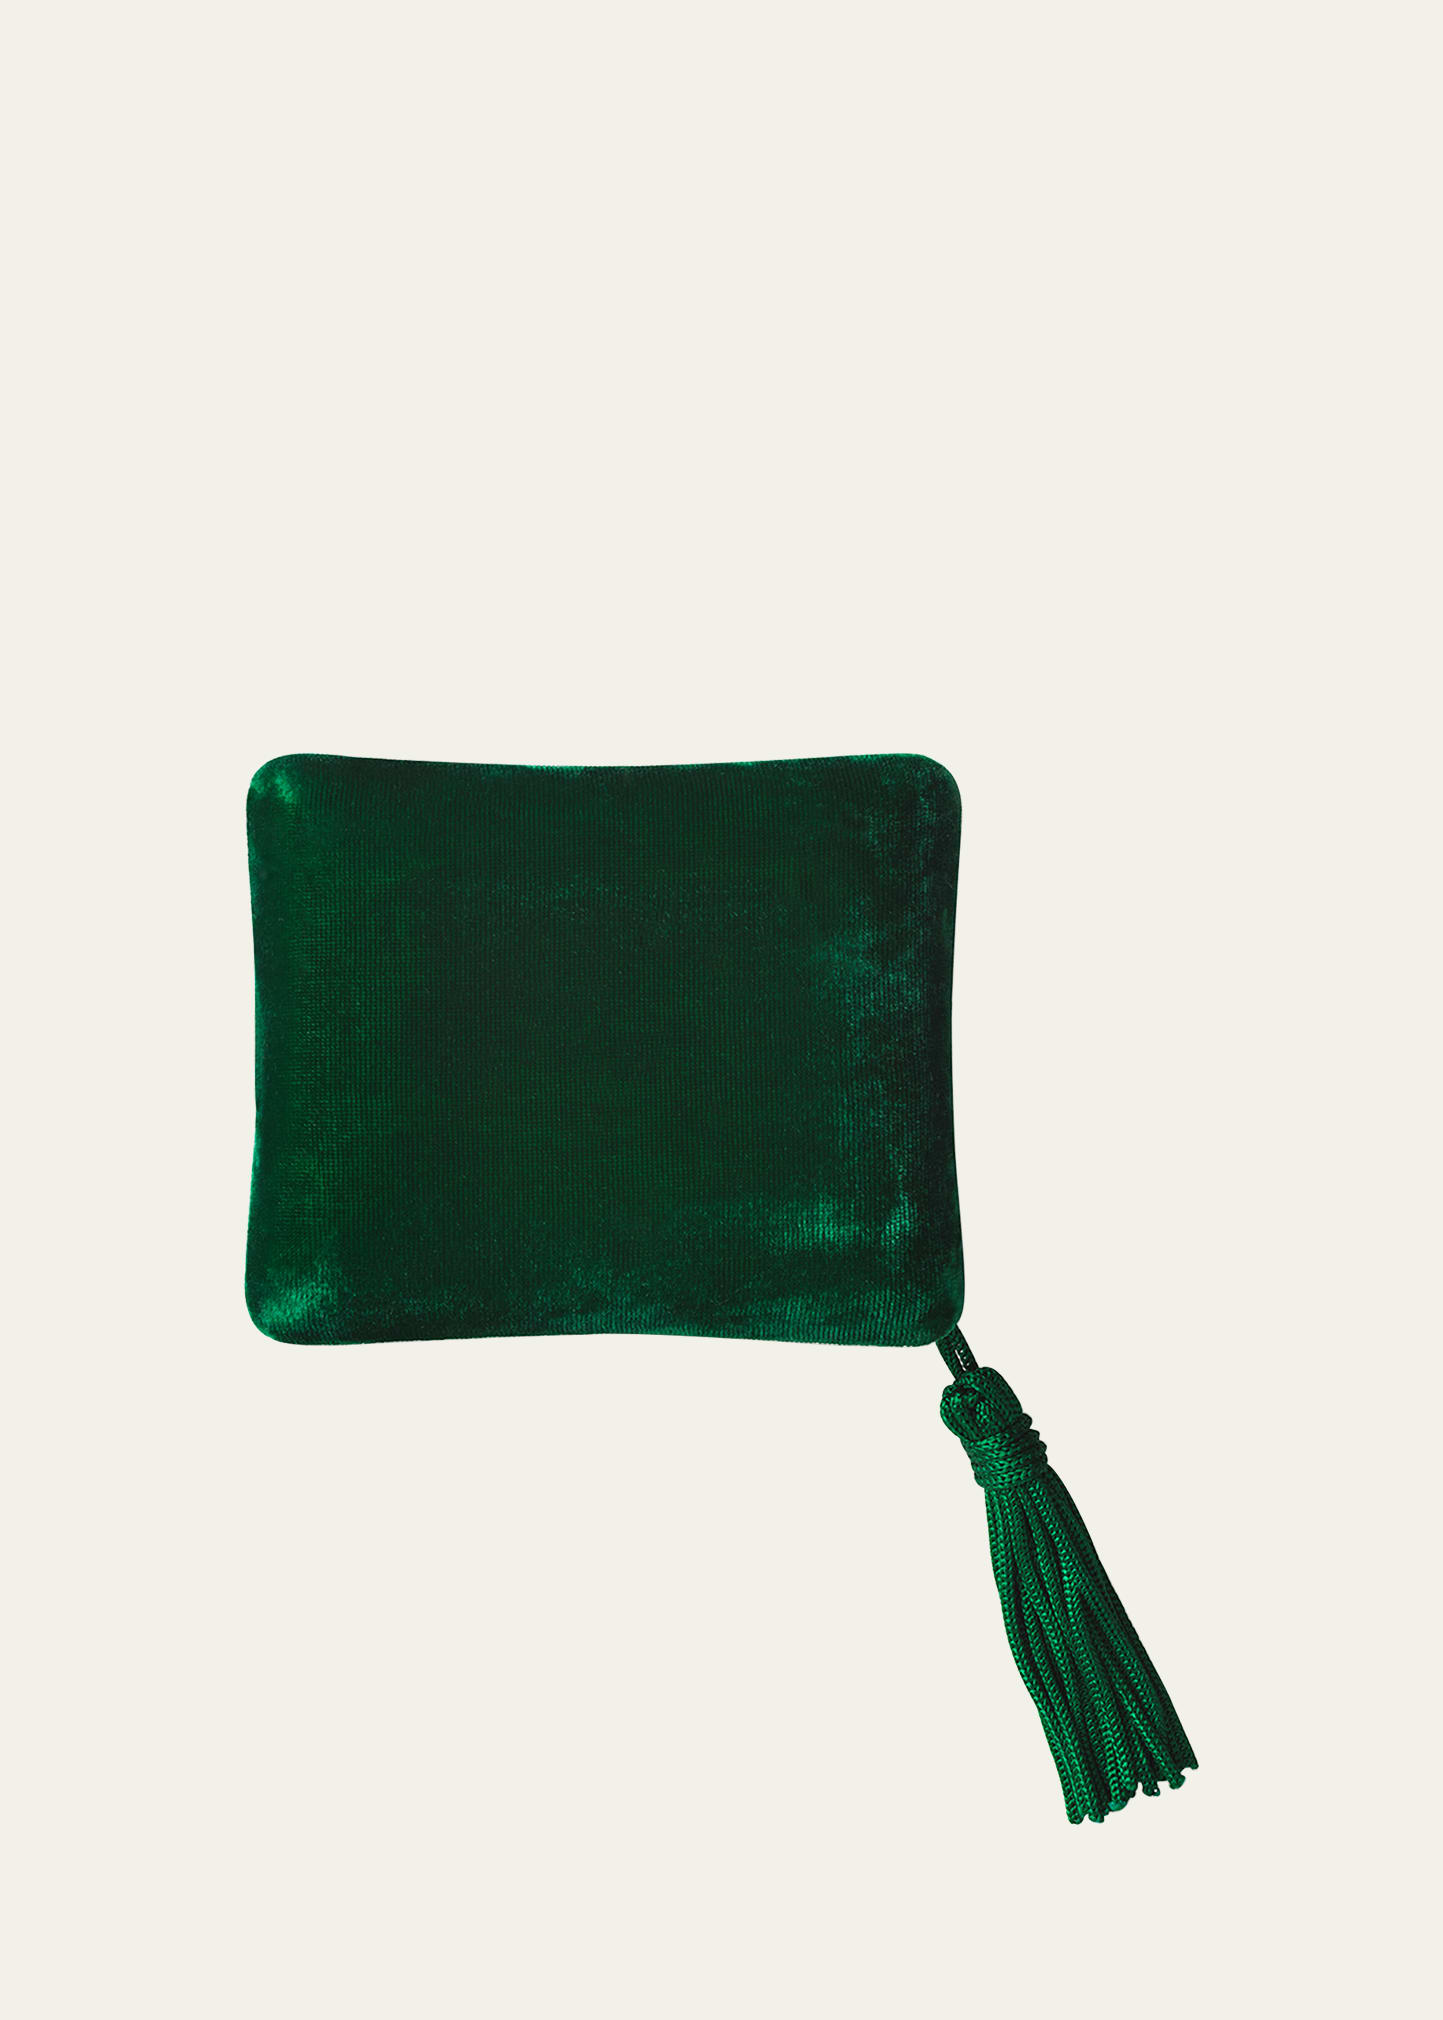 SOPHIE BILLE BRAHE EMERALD GREEN SMALL JEWELRY BOX IN VELVET, 10.5X8.5CM